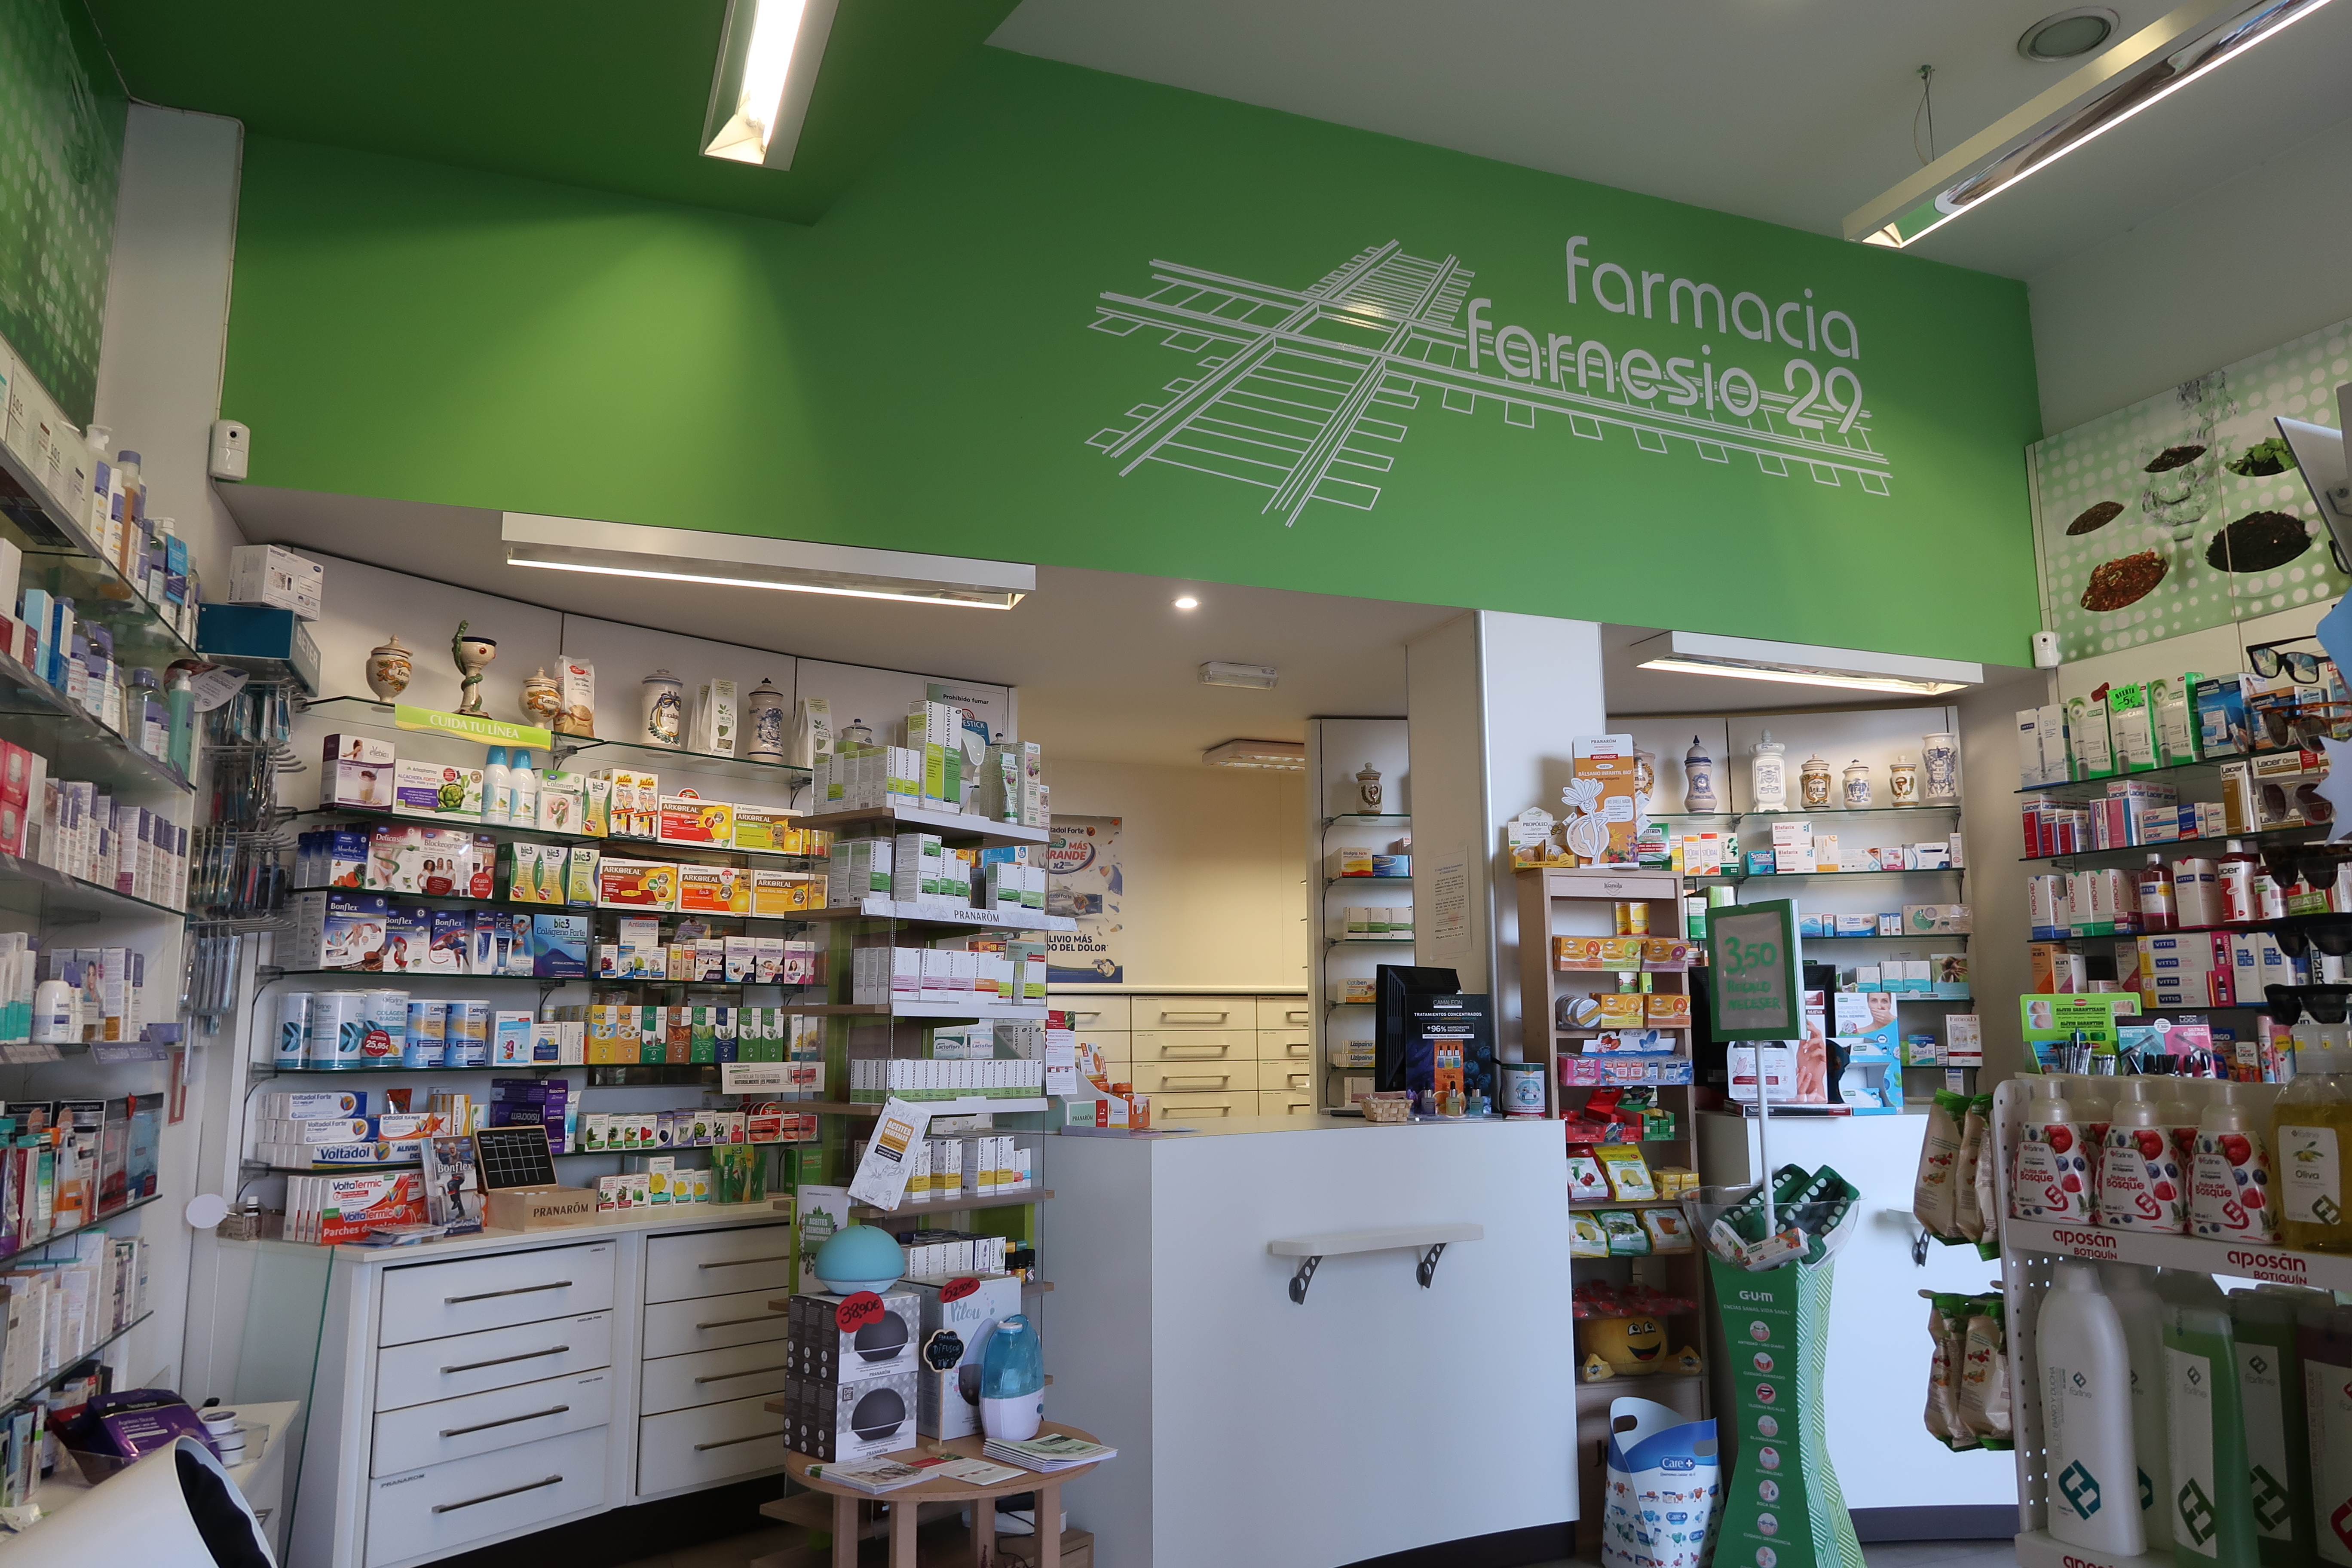 Images Farmacia farnesio 29 (Lda. Basilia Illana Fernández)